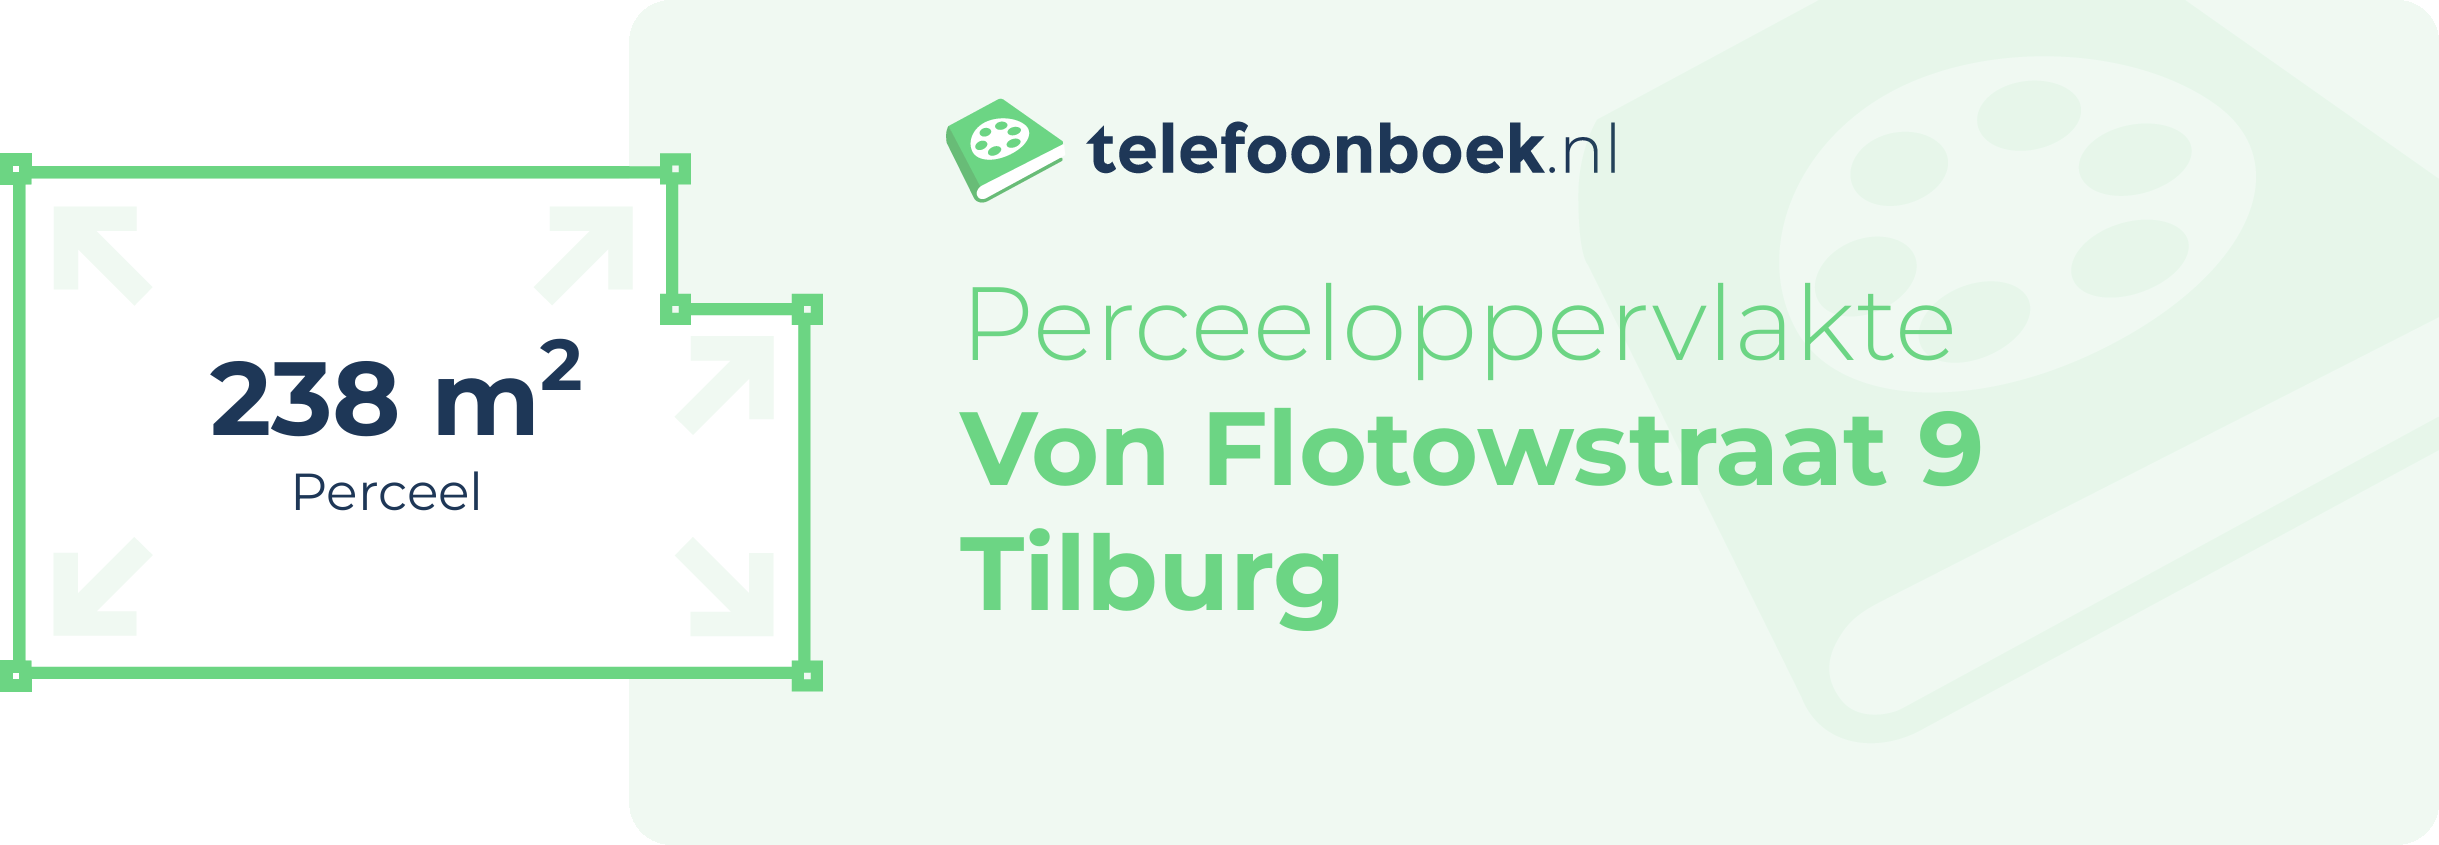 Perceeloppervlakte Von Flotowstraat 9 Tilburg